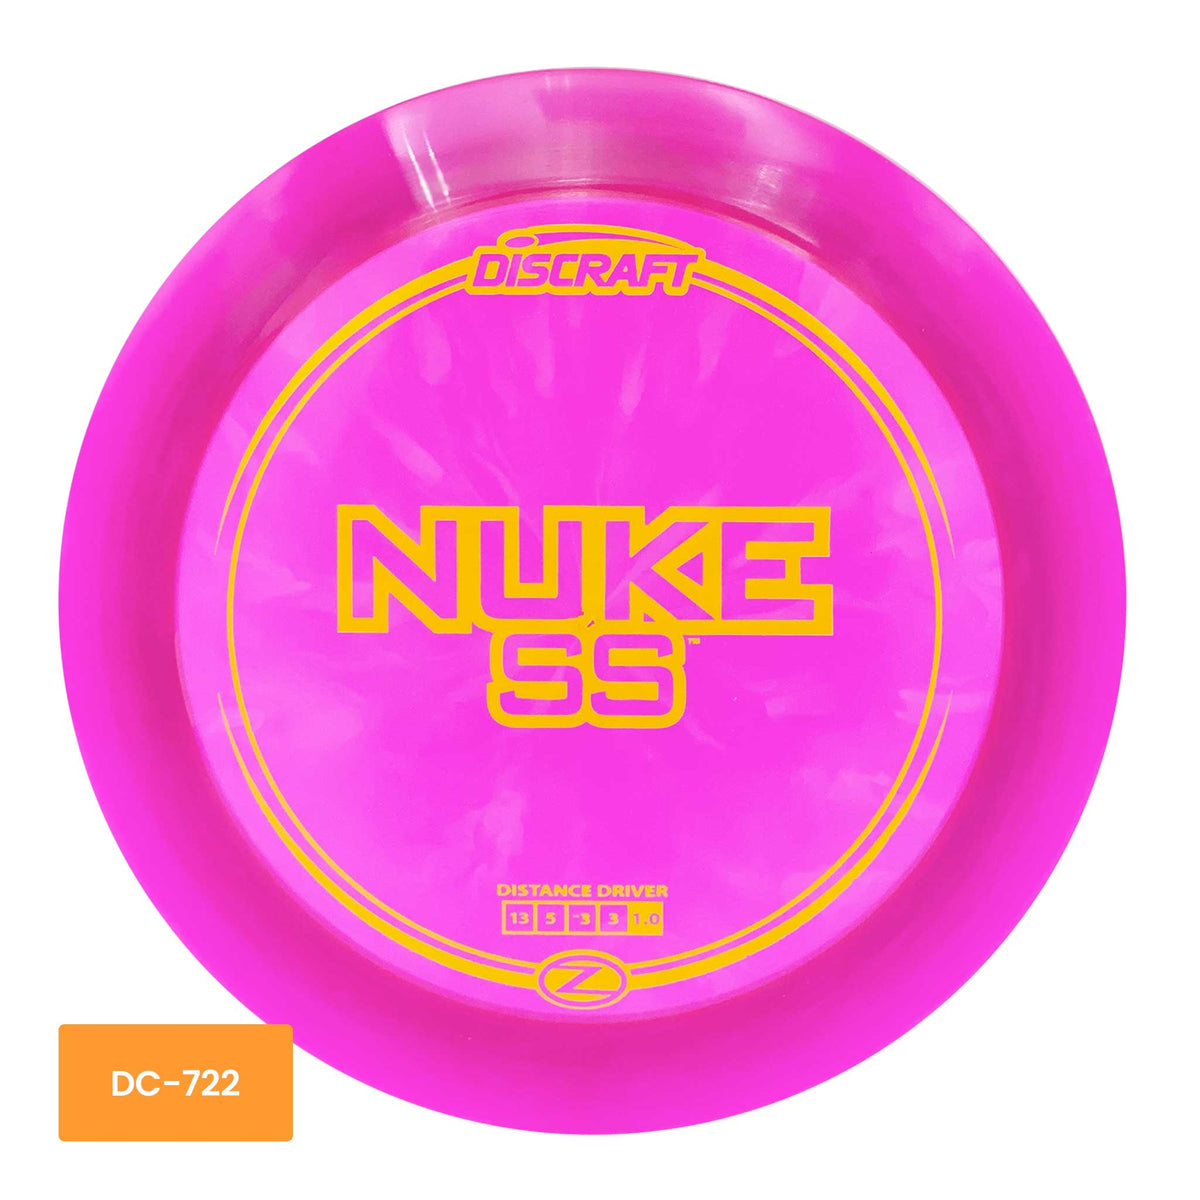 Discraft Z Line Nuke SS distance driver - Pink